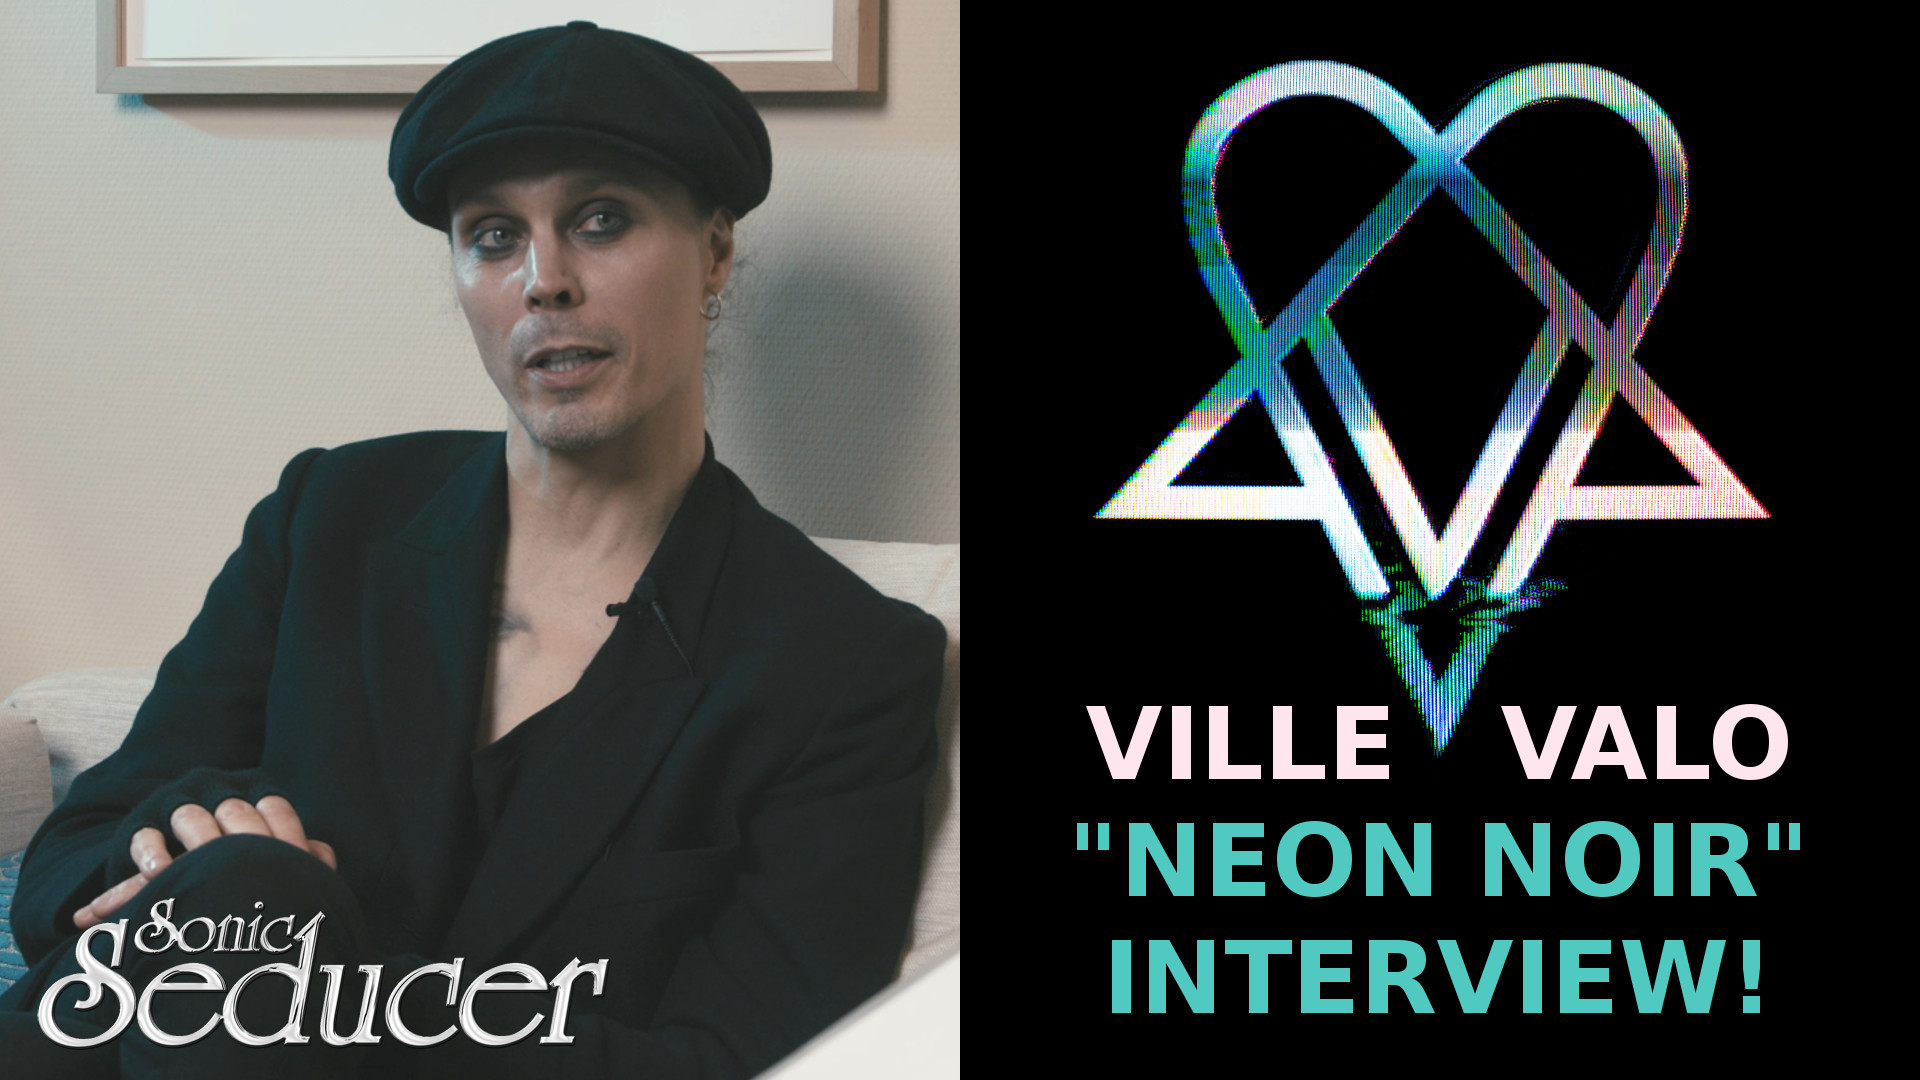 sonic-seducer-him-ville-valo-vv-neon-noir-2022-interview.jpg